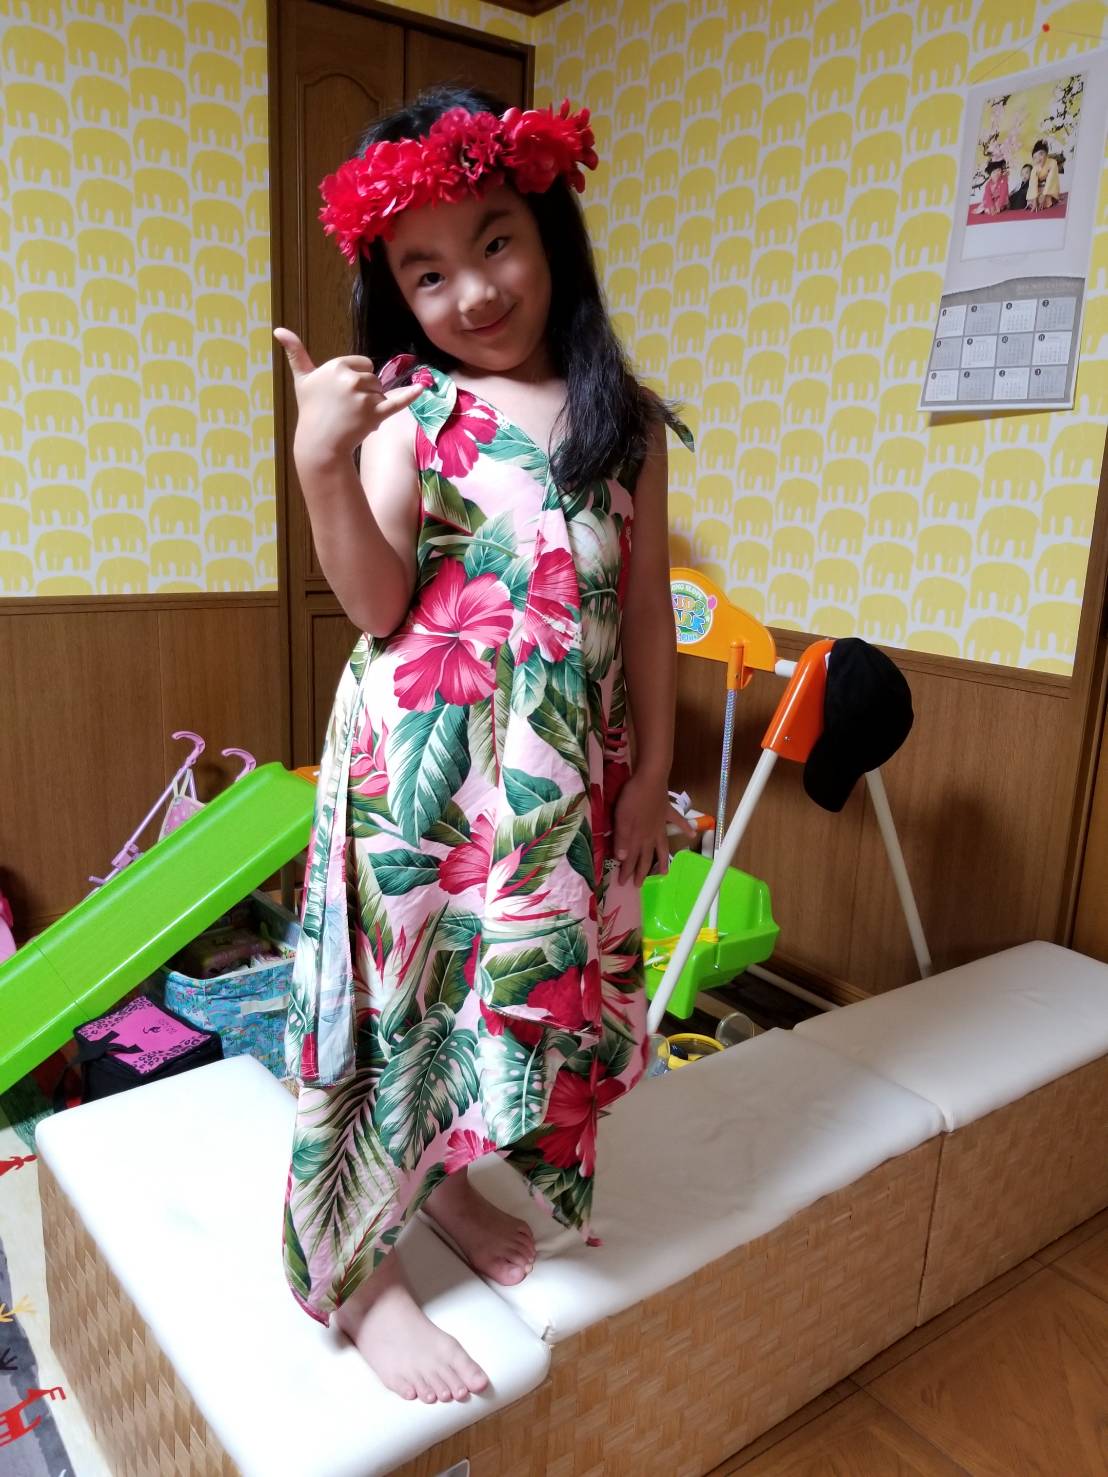 A kid wearing a floral dress